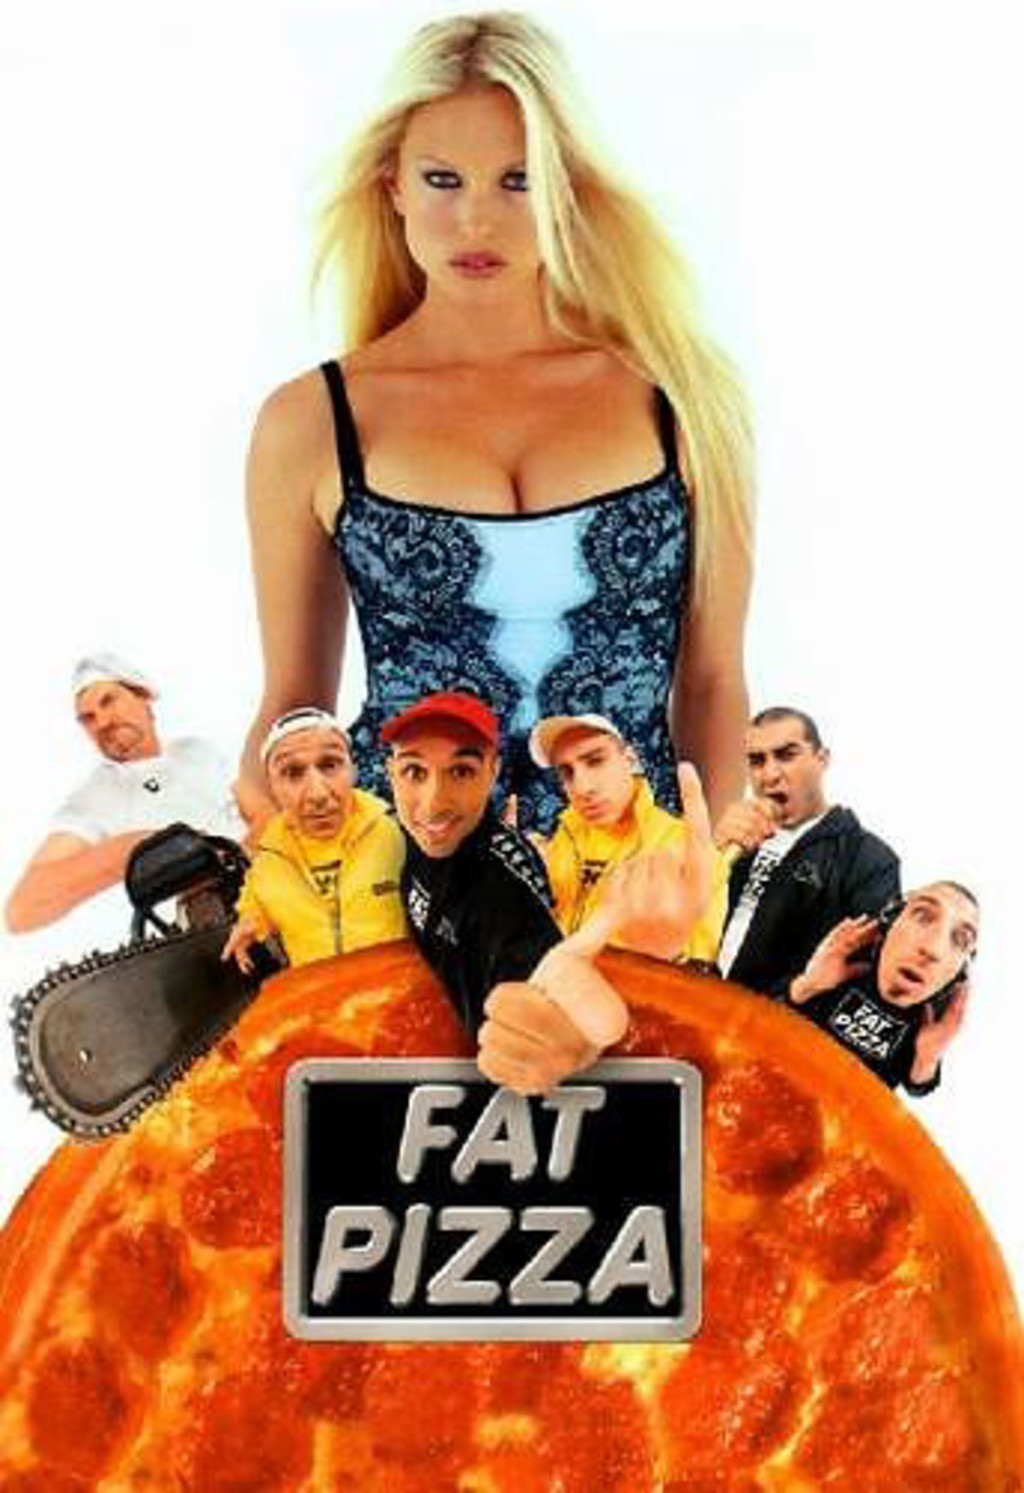 Watch Fat Pizza on Netflix Today! | NetflixMovies.com